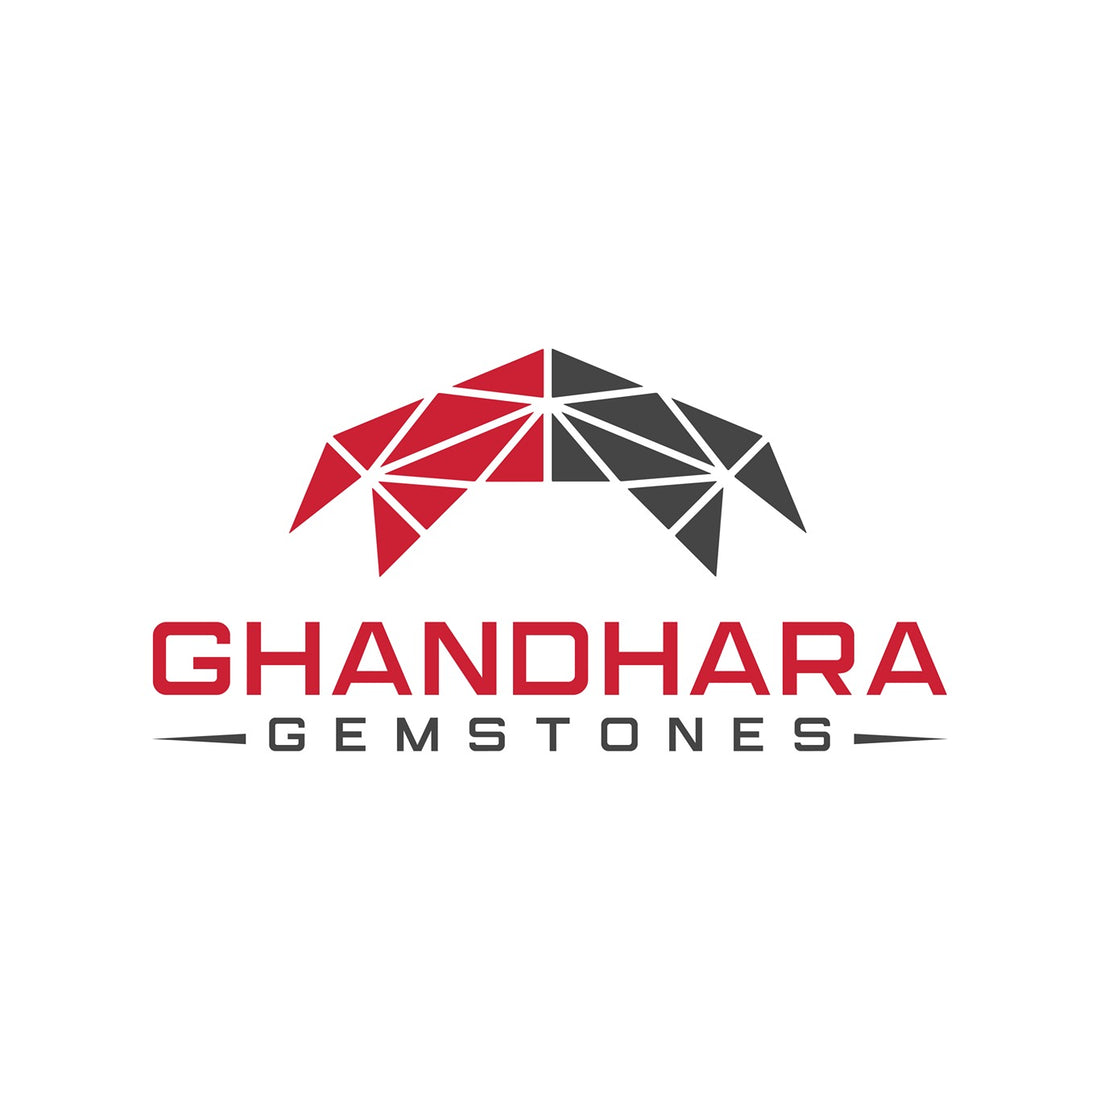 Gandhara Gems: Who Are We?